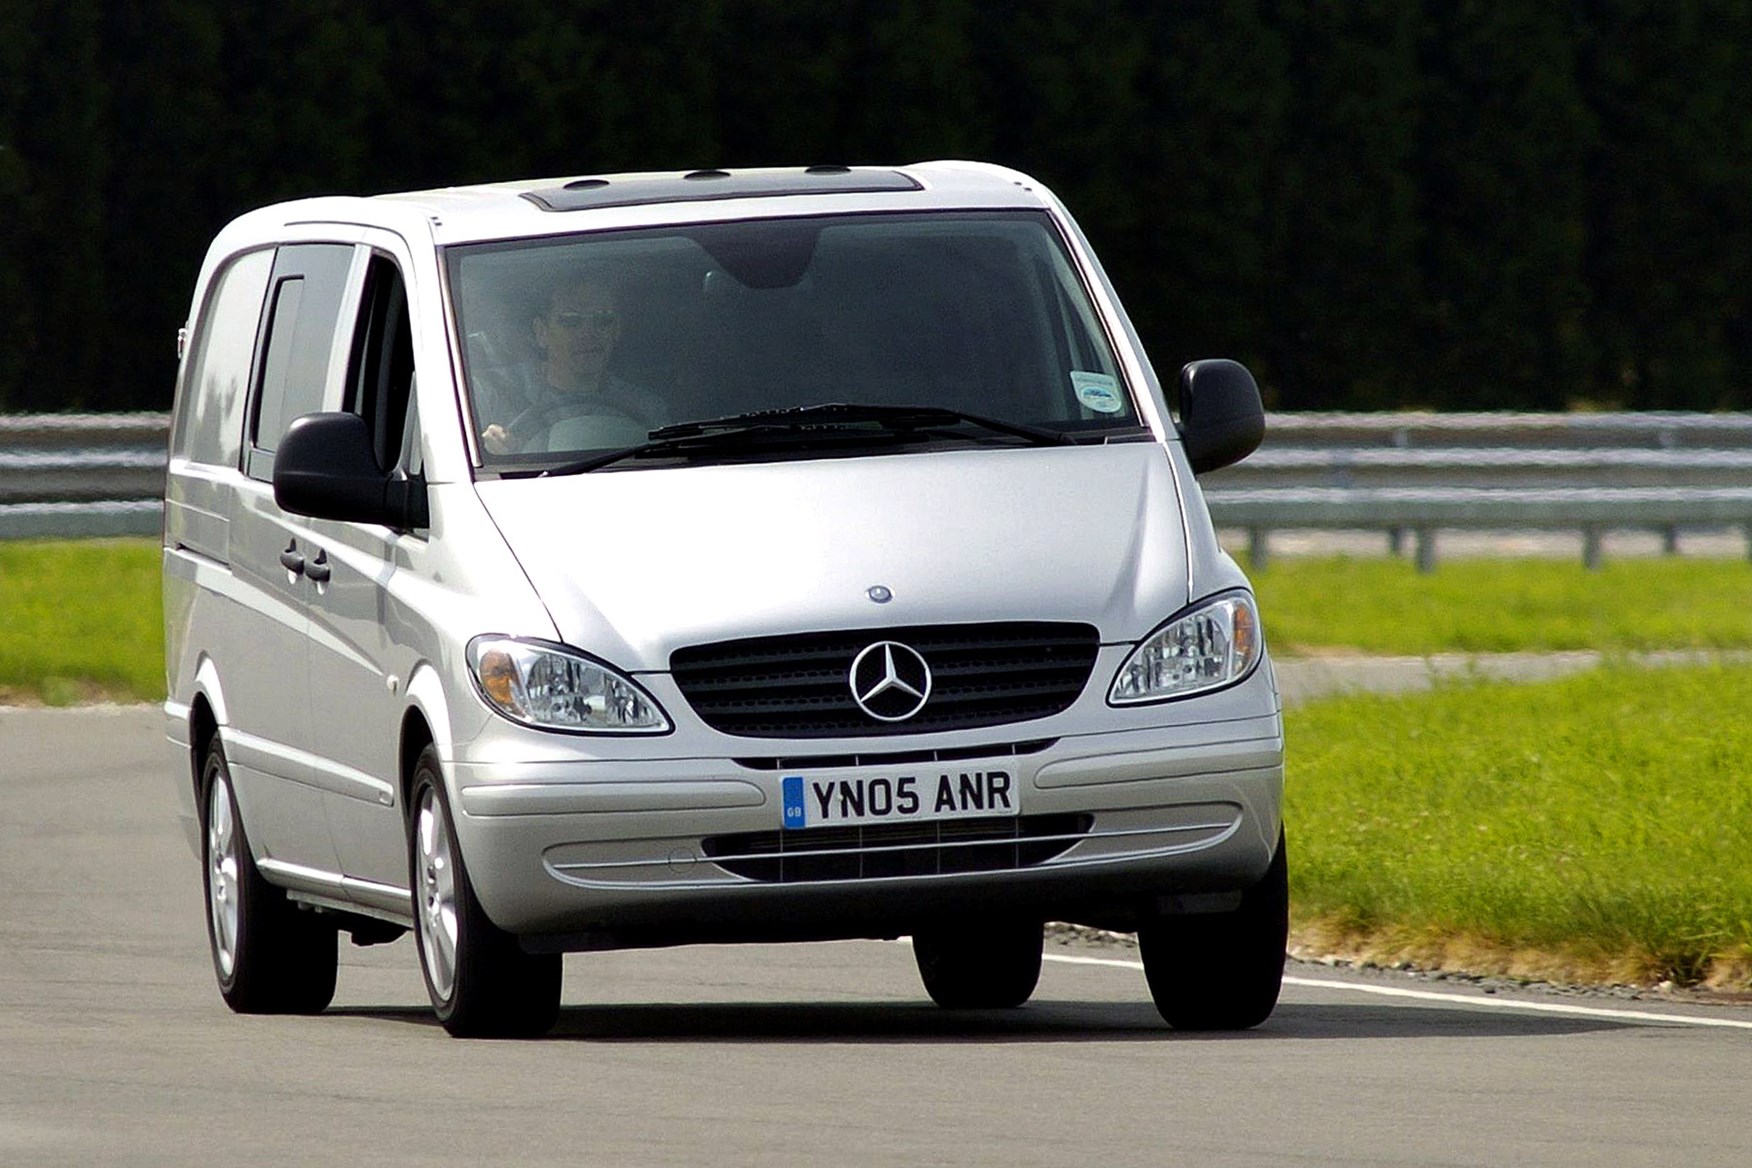 Mercedes-Benz Vito 2003-2014 review on Parkers Vans - front exterior